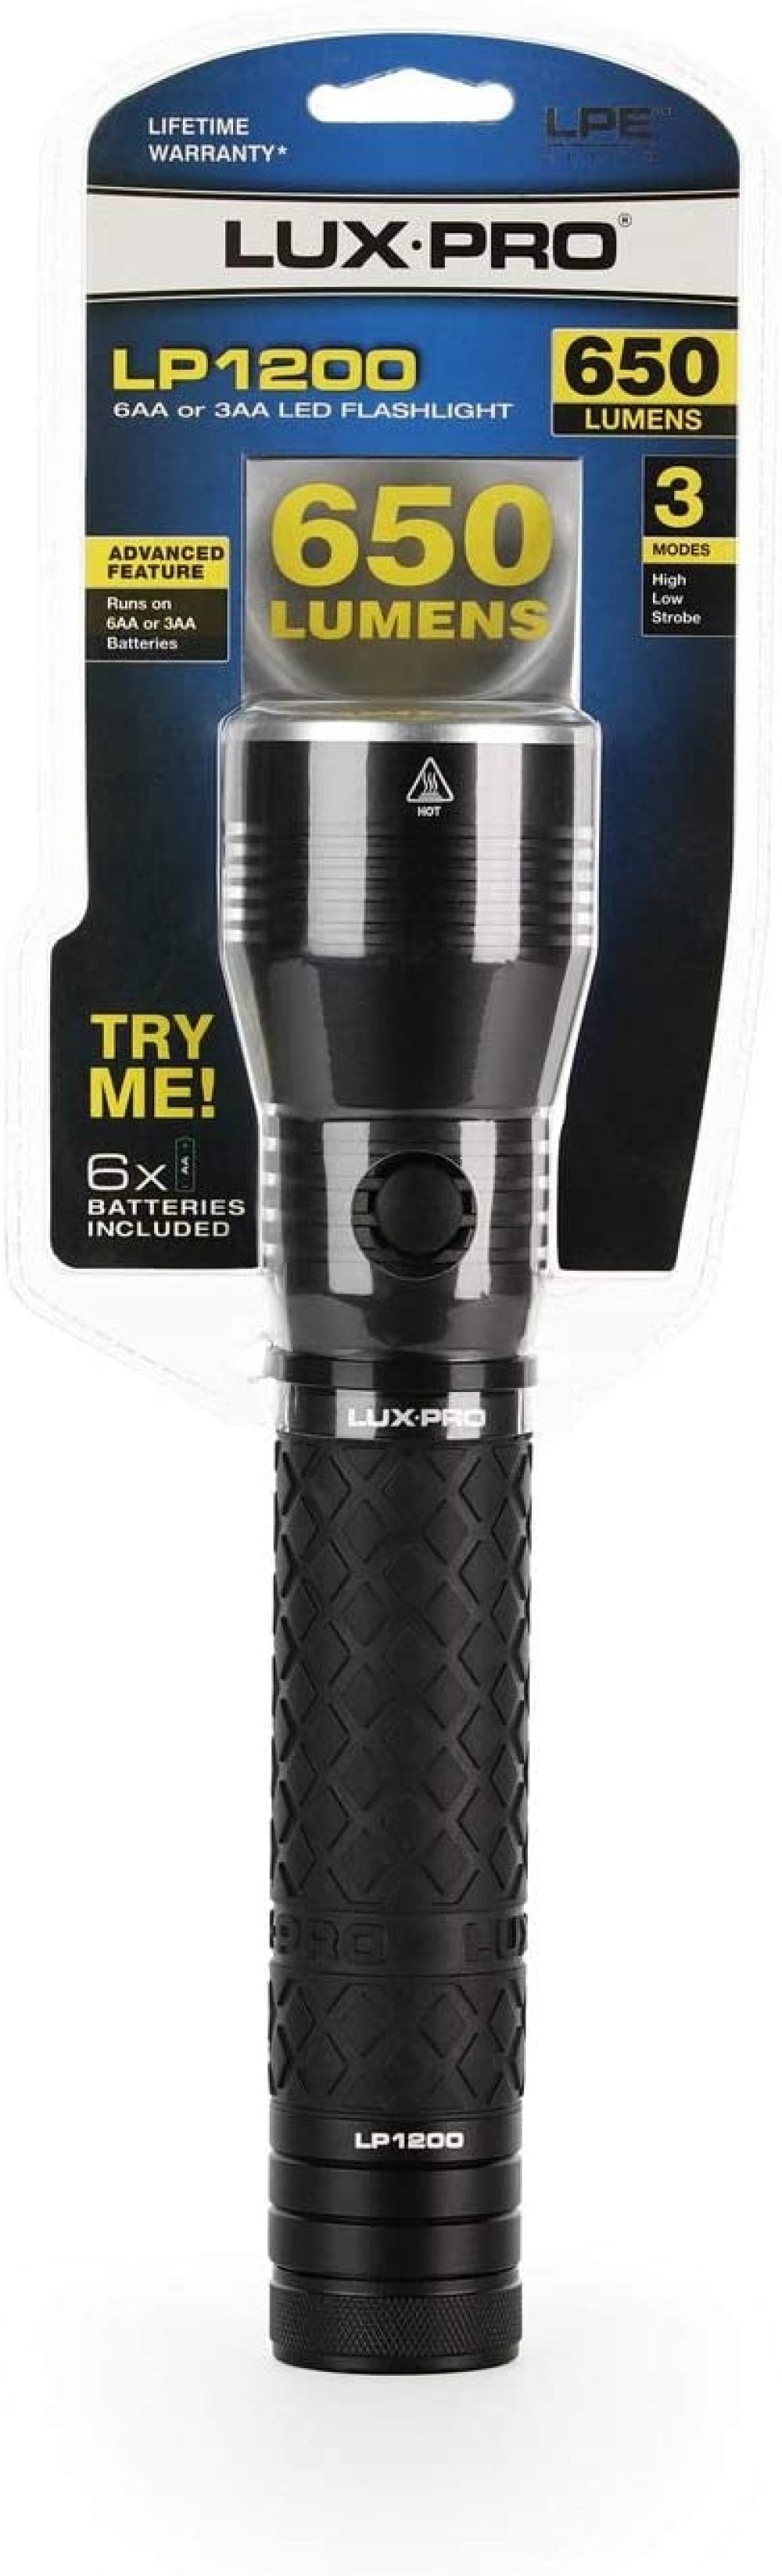 Luxpro LP1200 Extended Range 650 Lumen Heavy Duty Handheld LED Flashlight for sale online 